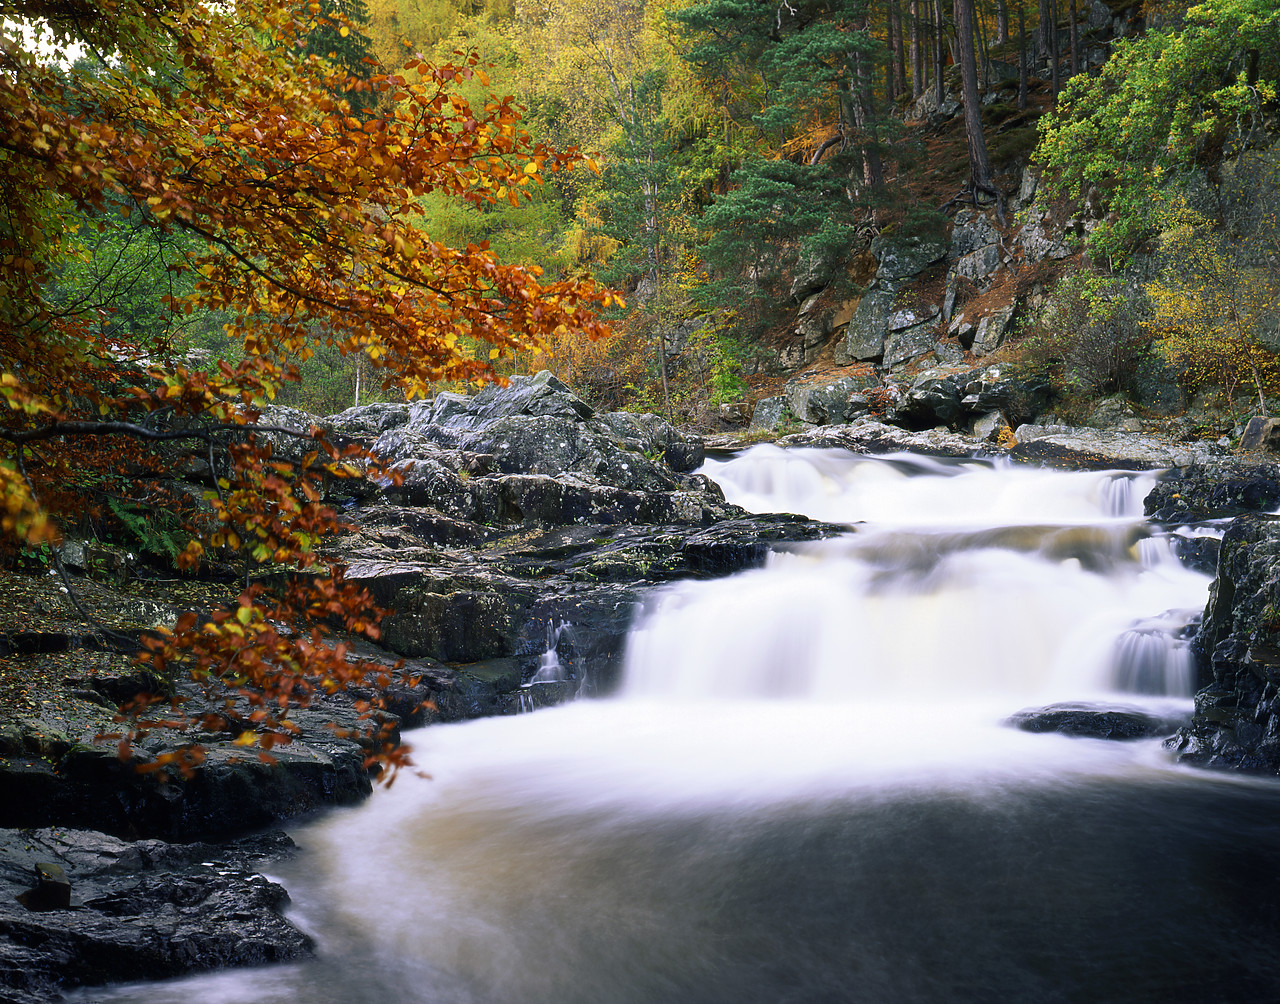 #970484-2 - Waterfall in Autumn, Linn of Tummel, Tayside Region, Scotland